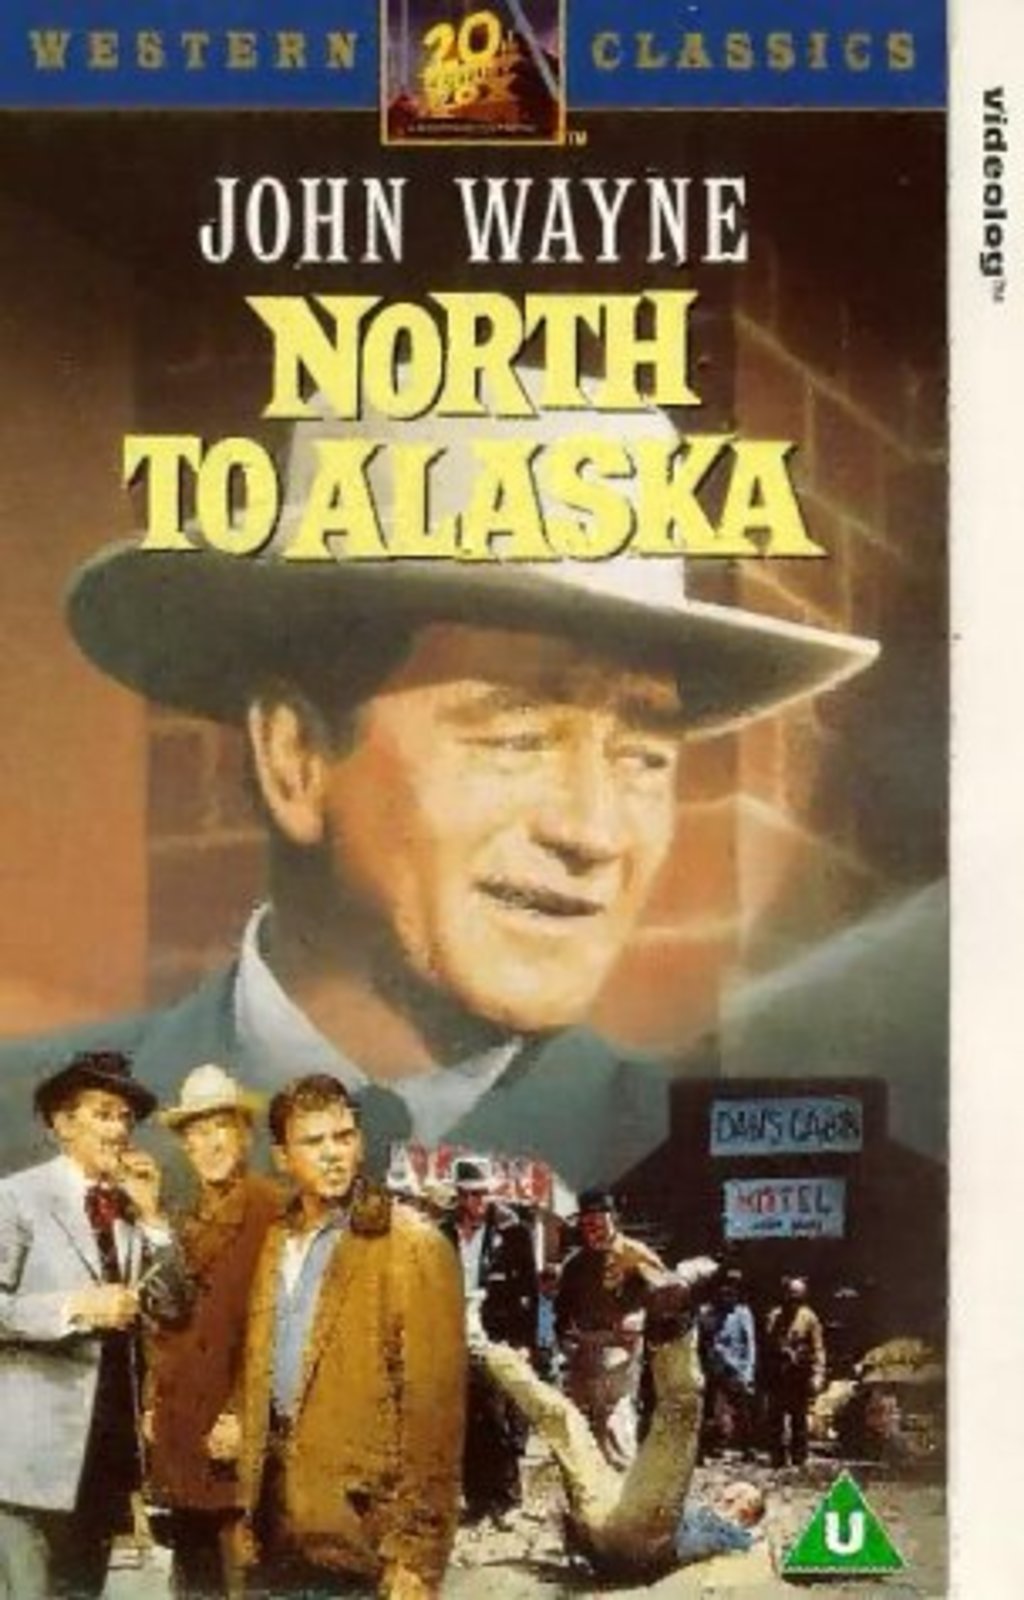 Watch North to Alaska on Netflix Today!